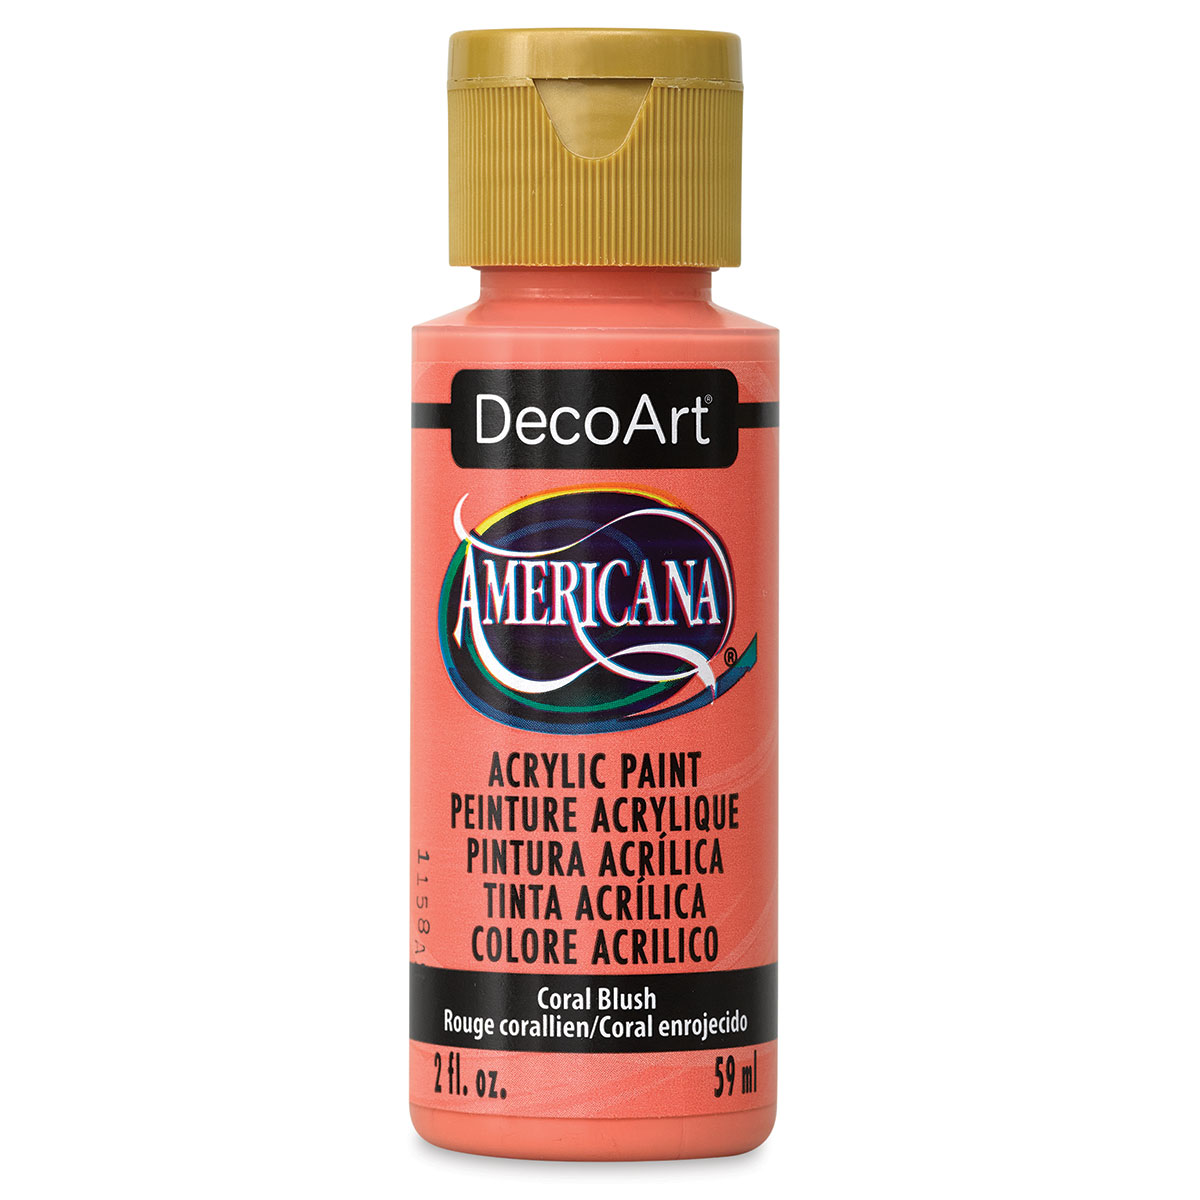 DecoArt Americana Acrylic Paint - Bright Orange, 2 oz